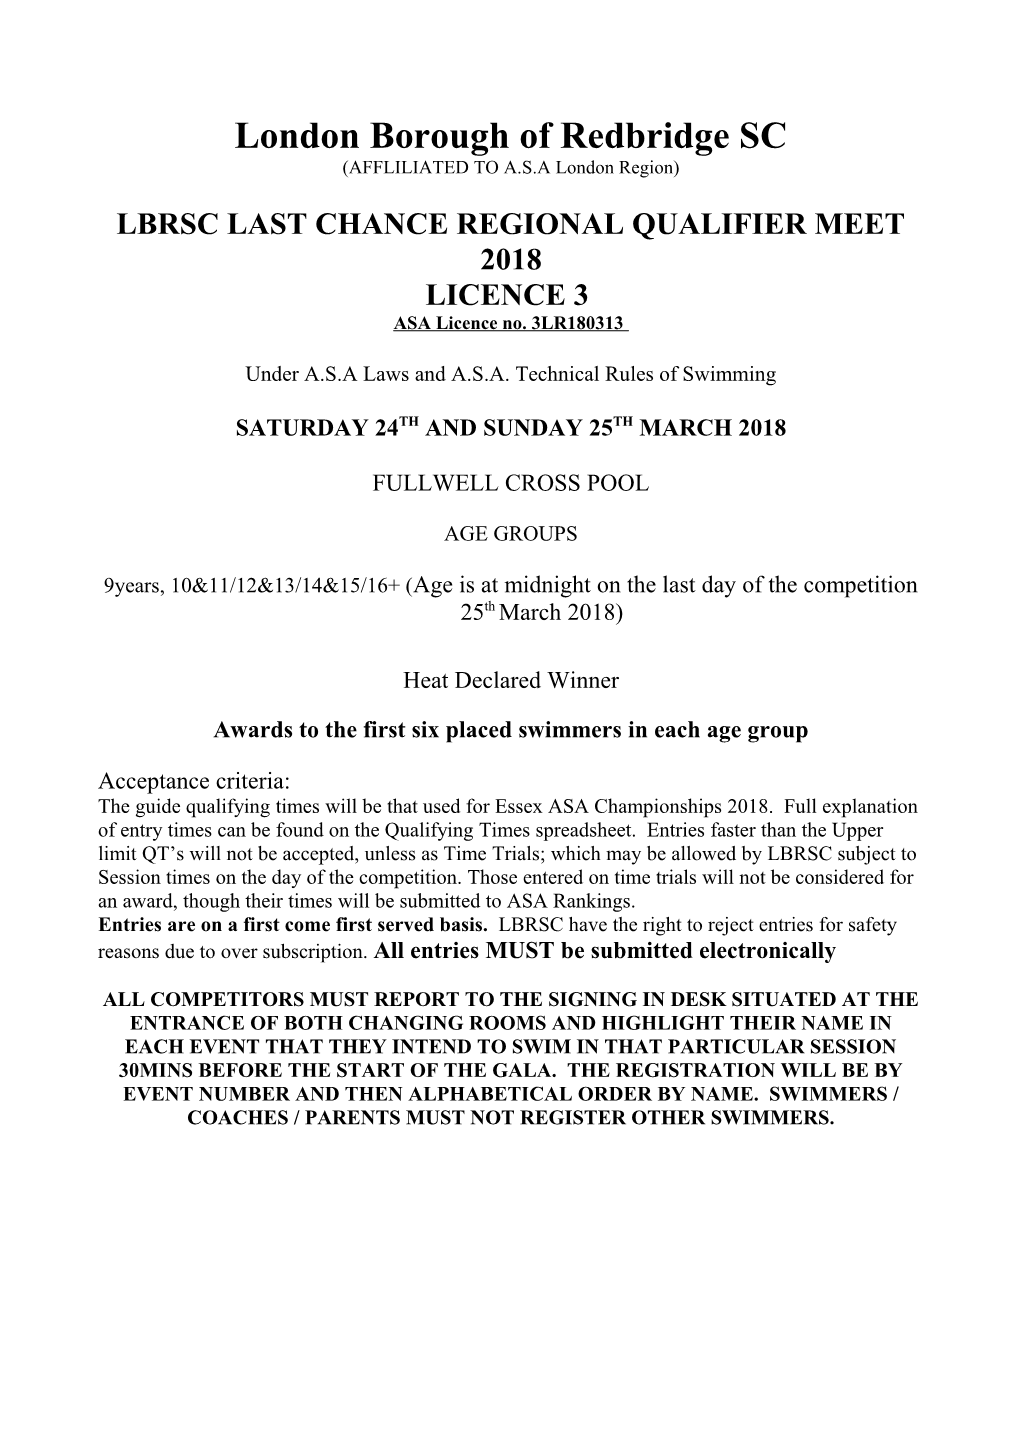 Lbrsc Last Chance Regional Qualifier Meet2018